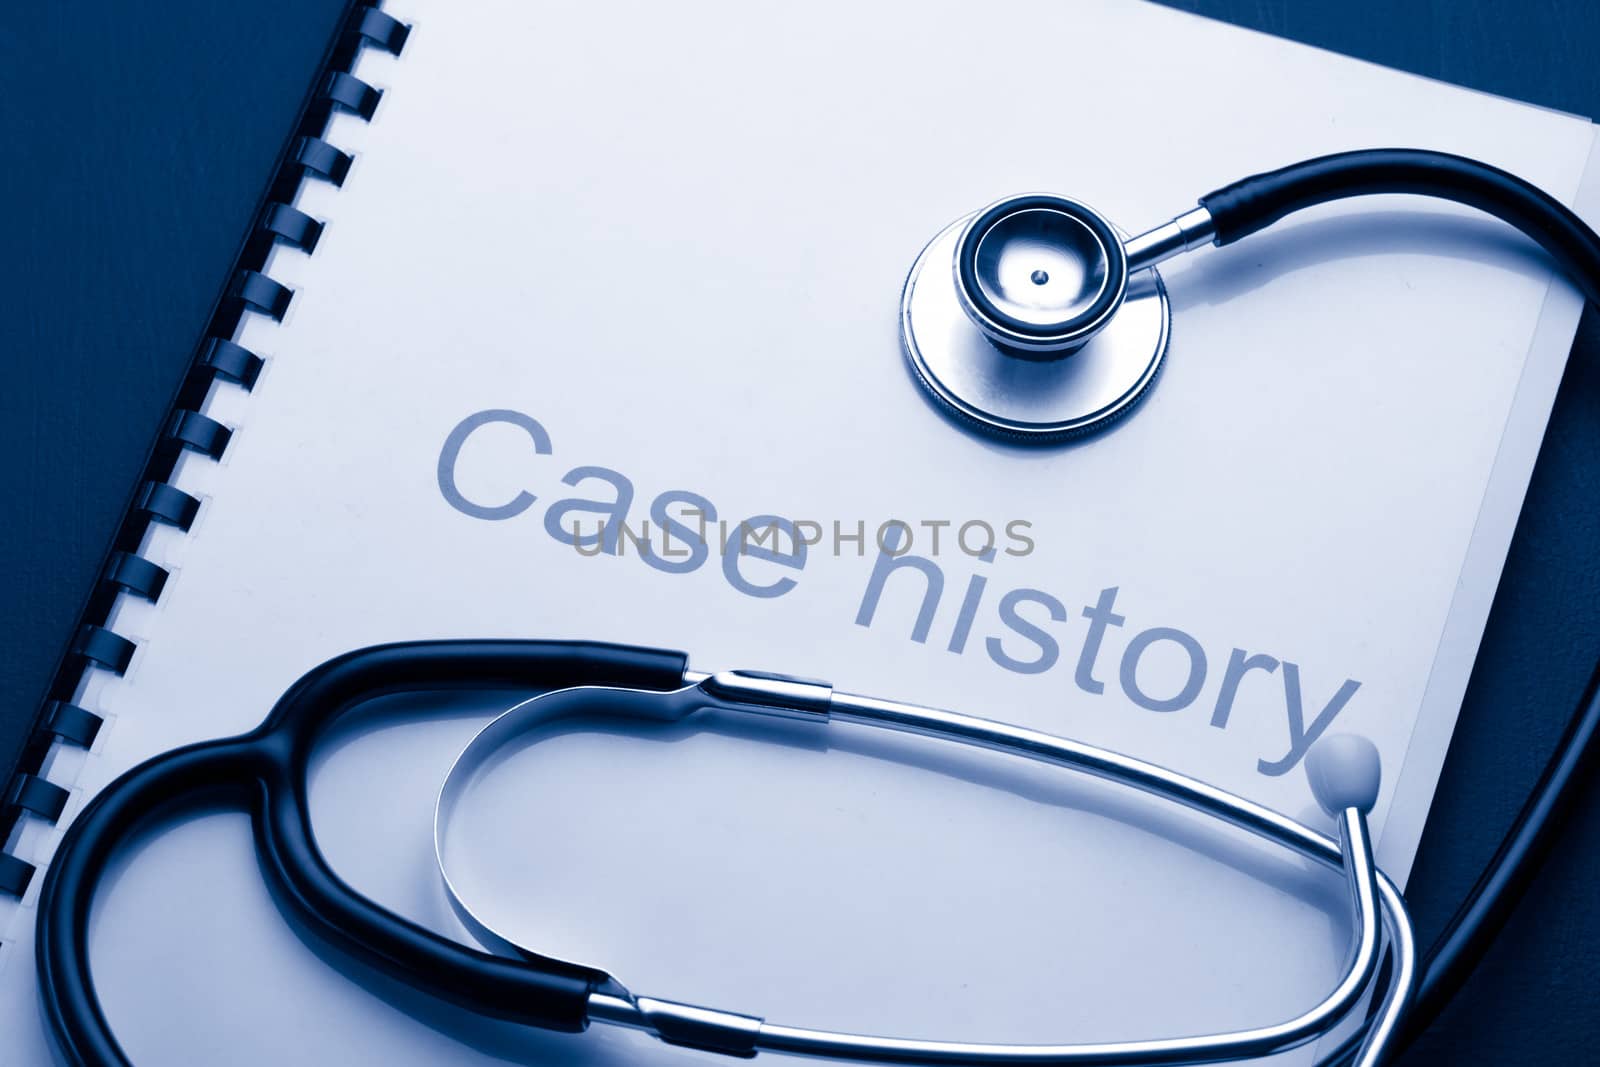 Case history and stethoscope on black by Garsya